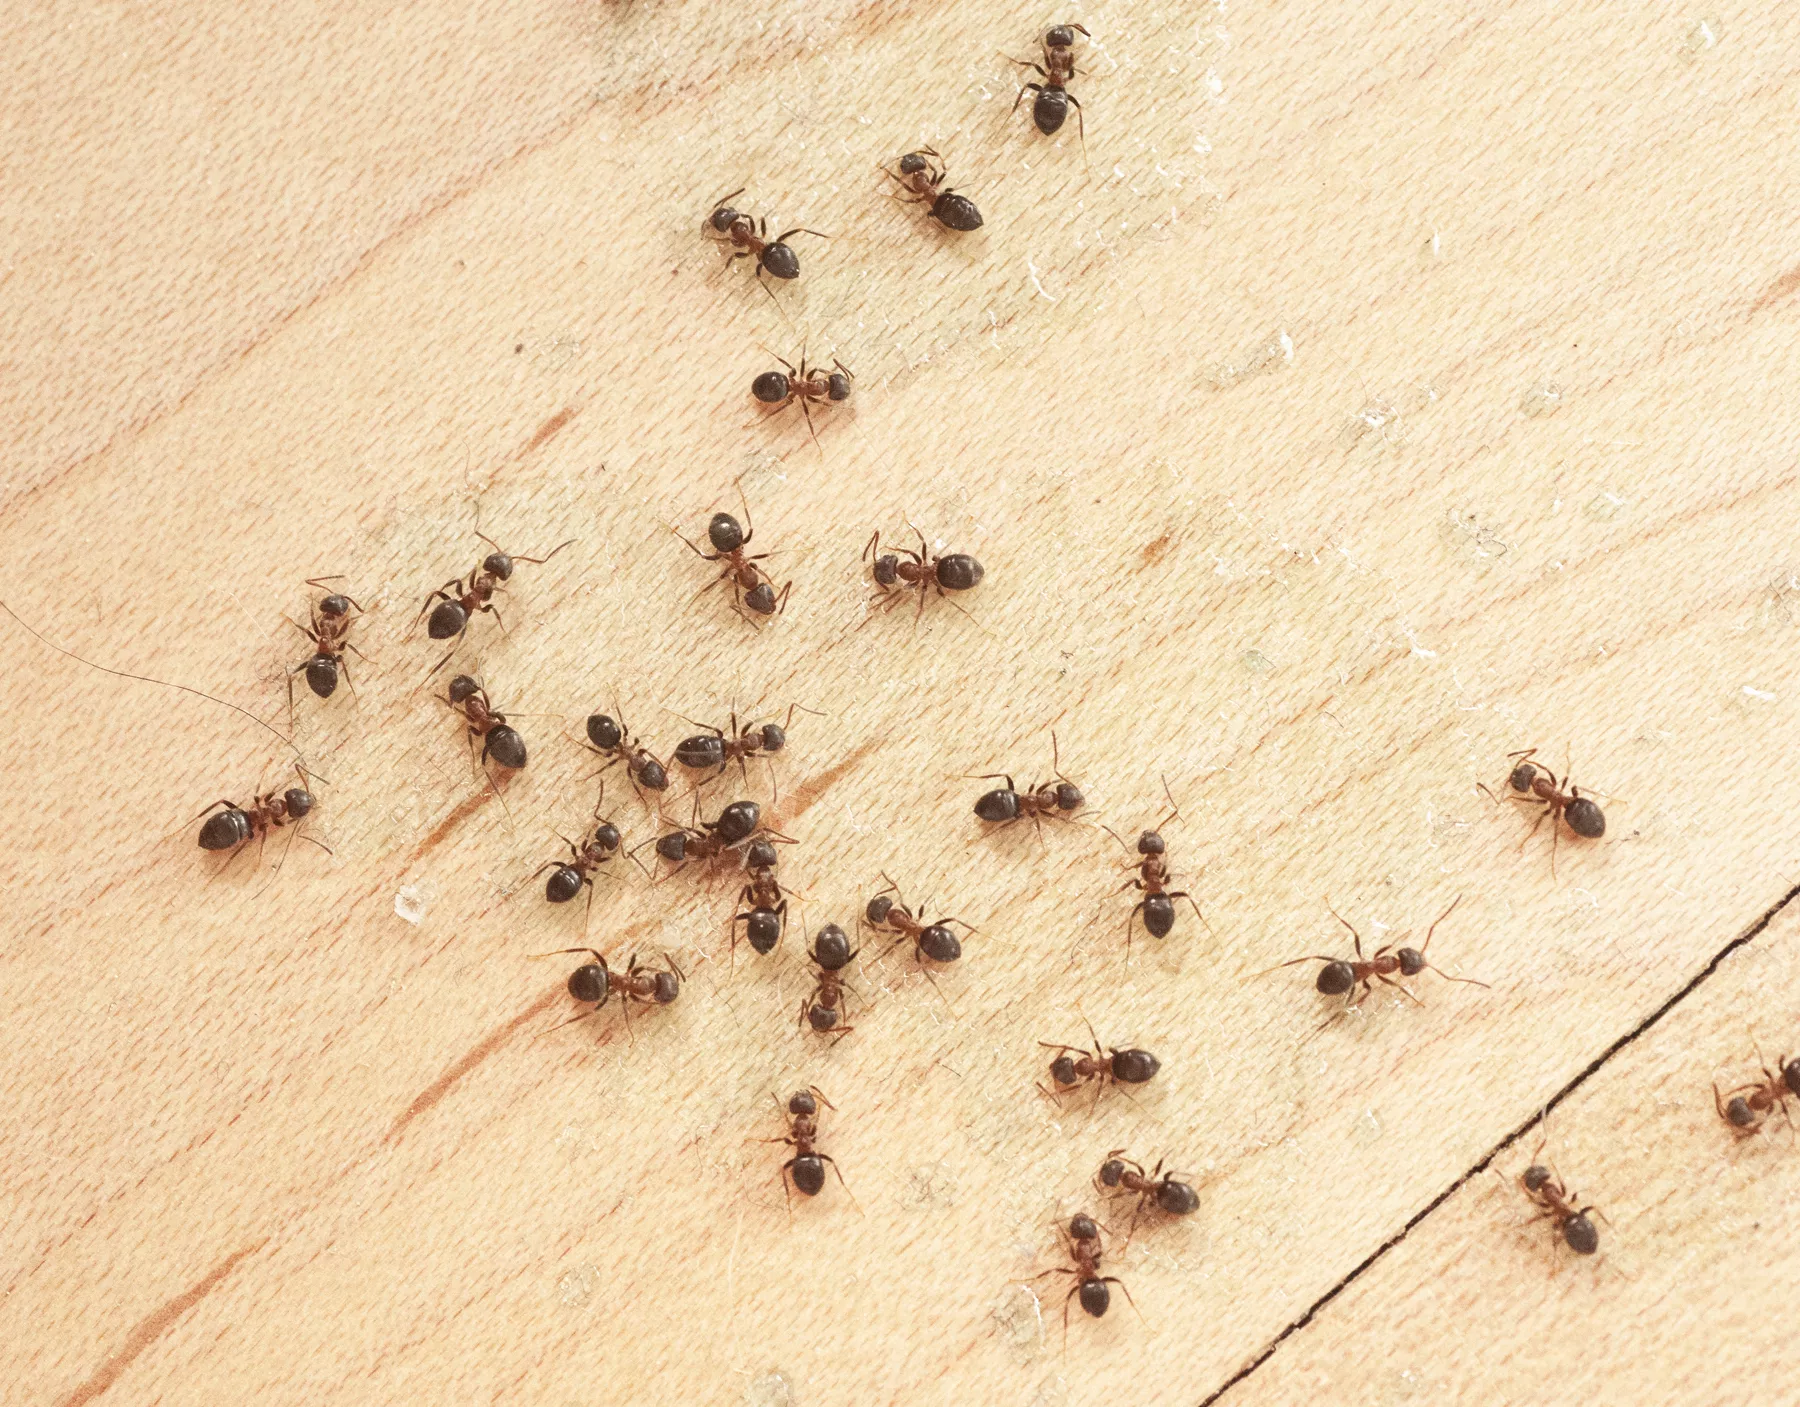 Ants In Kitchen.webp